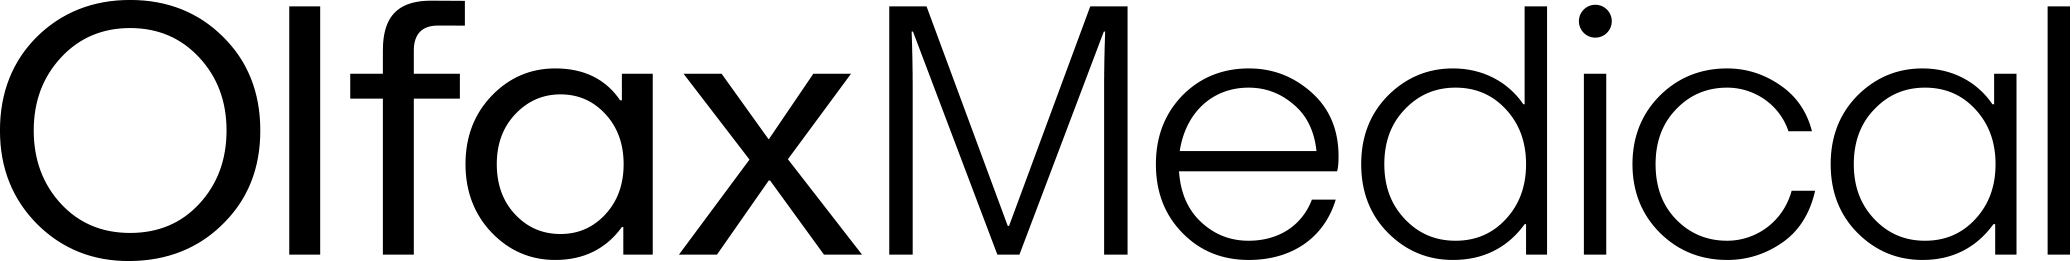 Ofx Logo Wordmark Final K